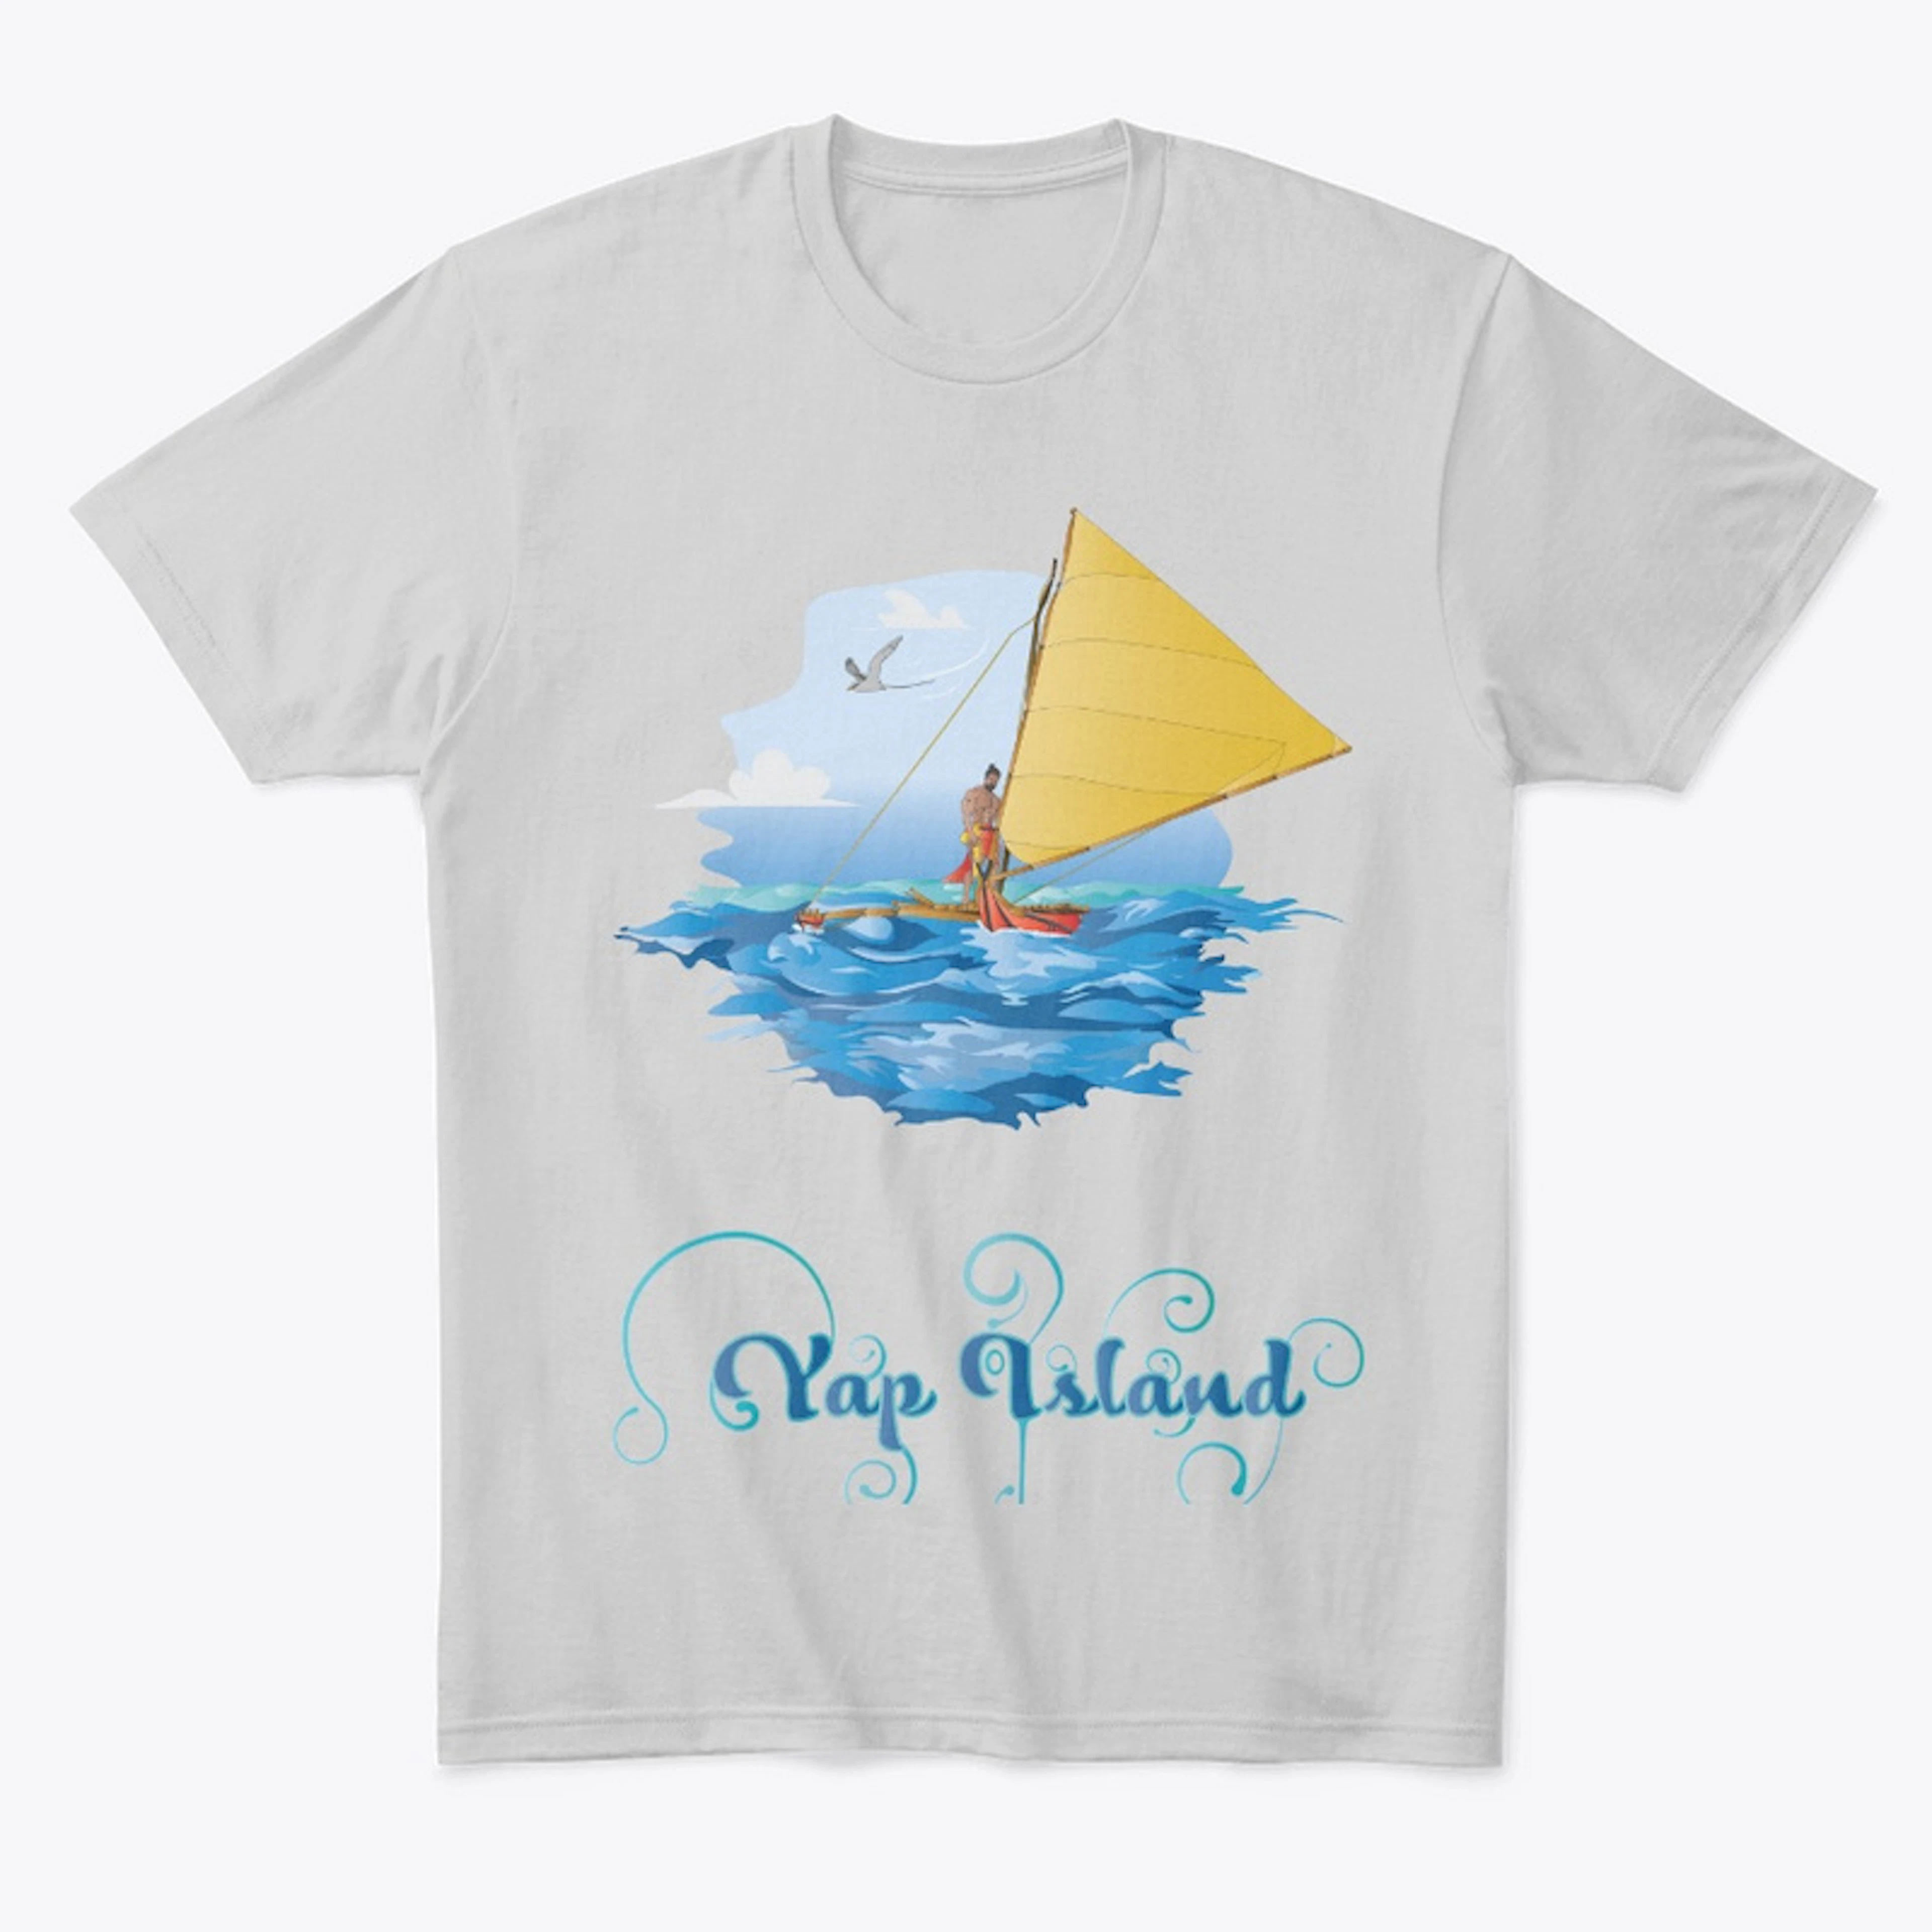 Yap Sail Away